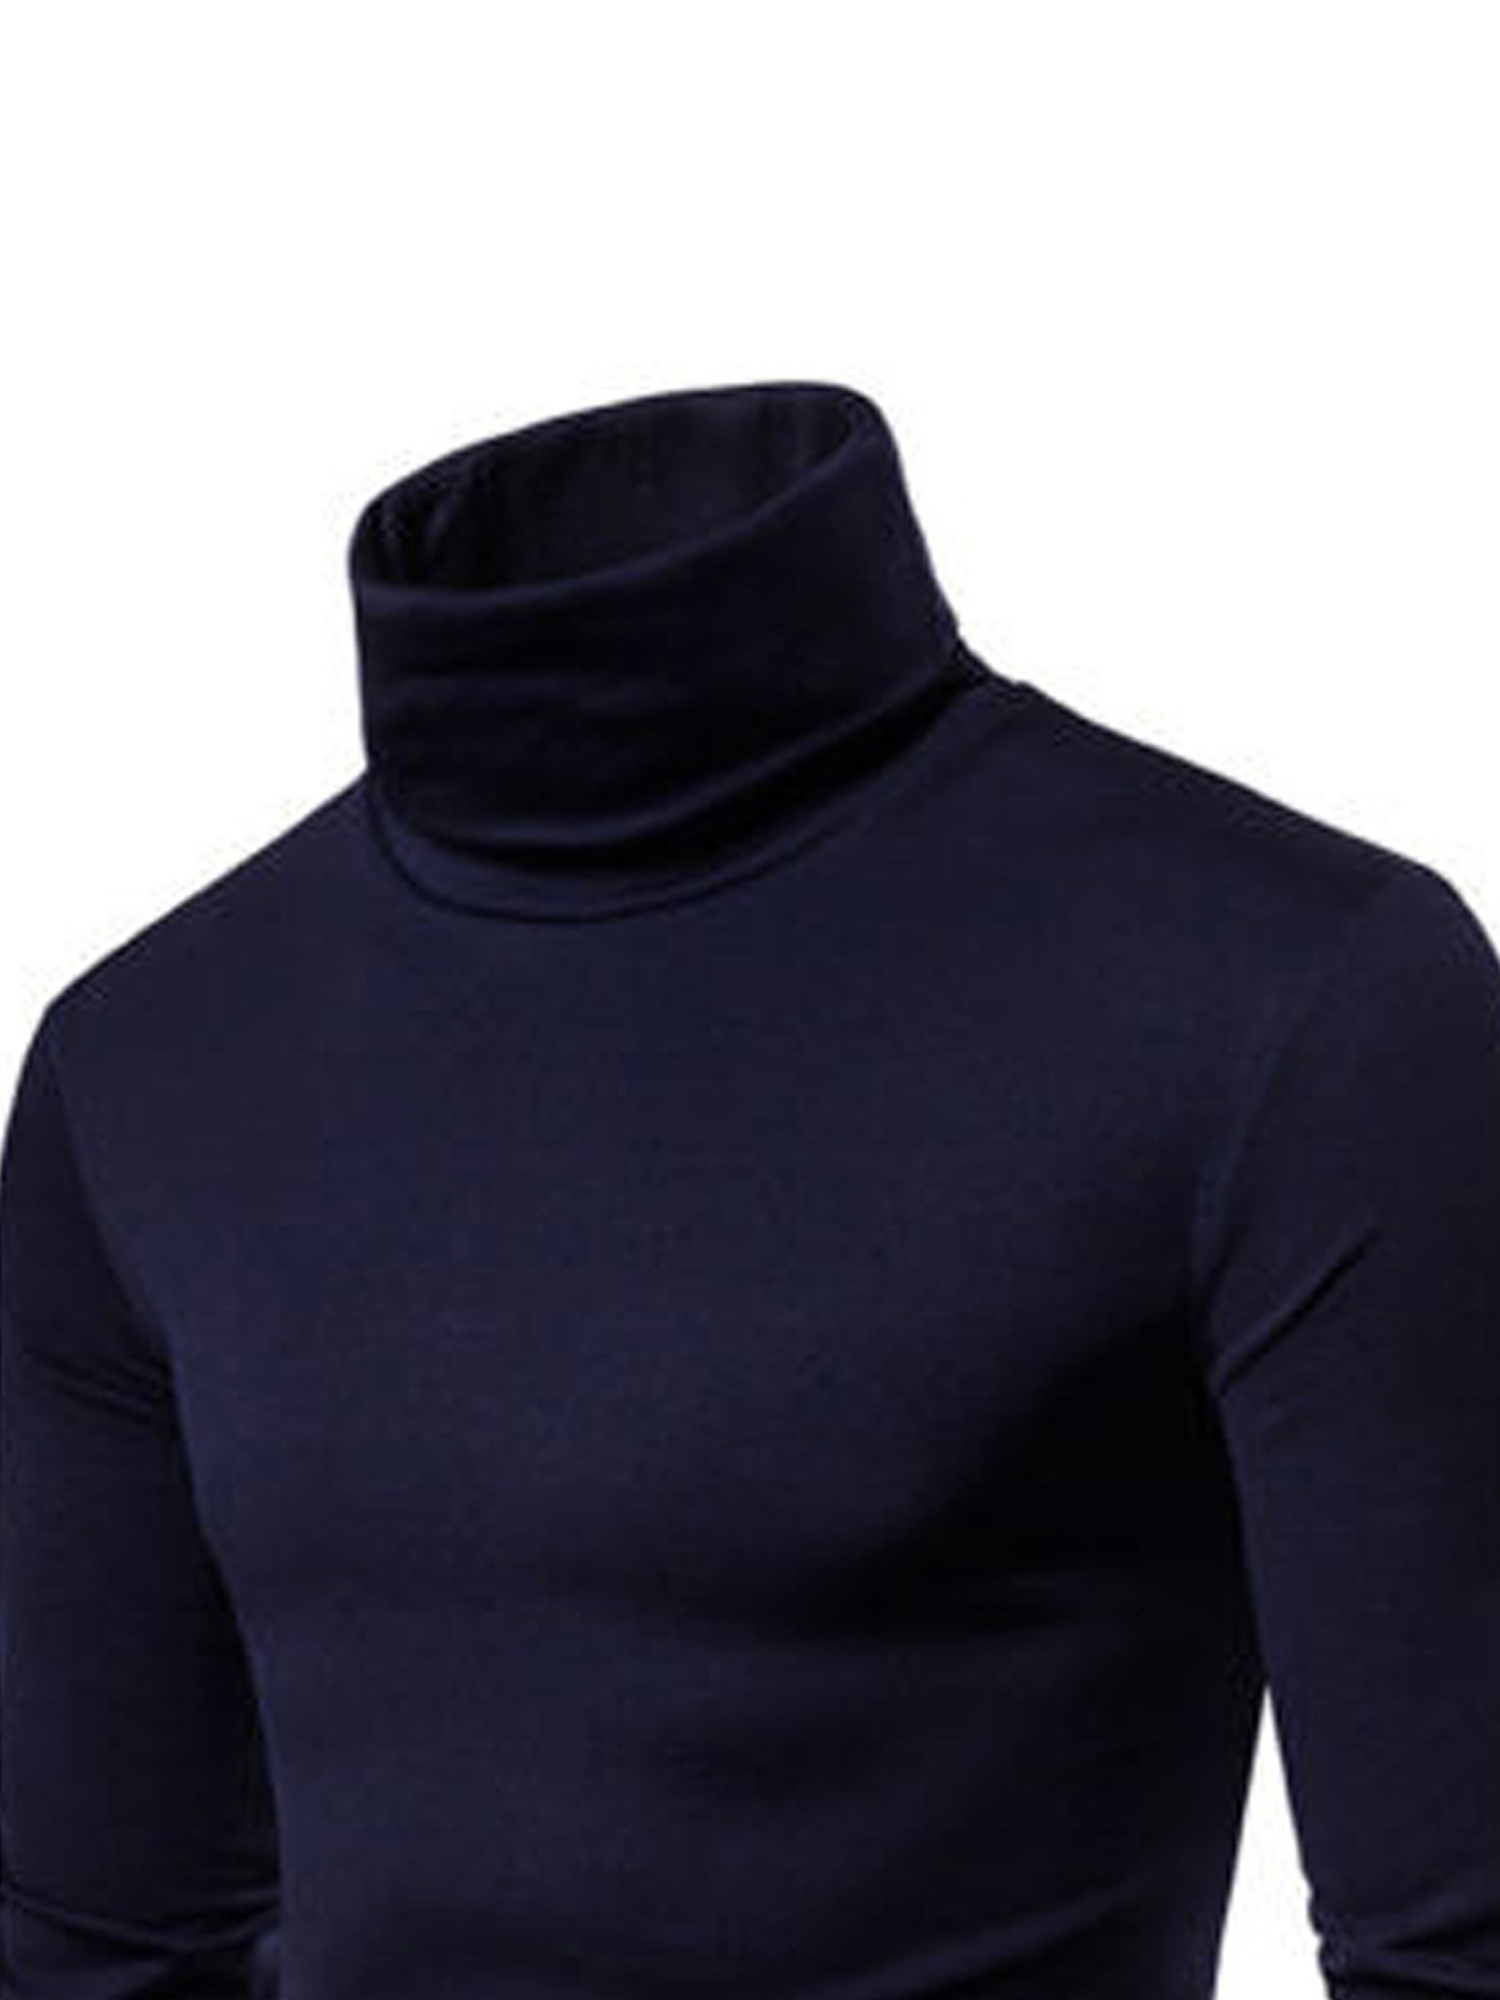 Sunisery Mens Turtleneck Pullover Knitted Jumper Tops Stretch Slim Basic Sweater Shirt - image 5 of 6